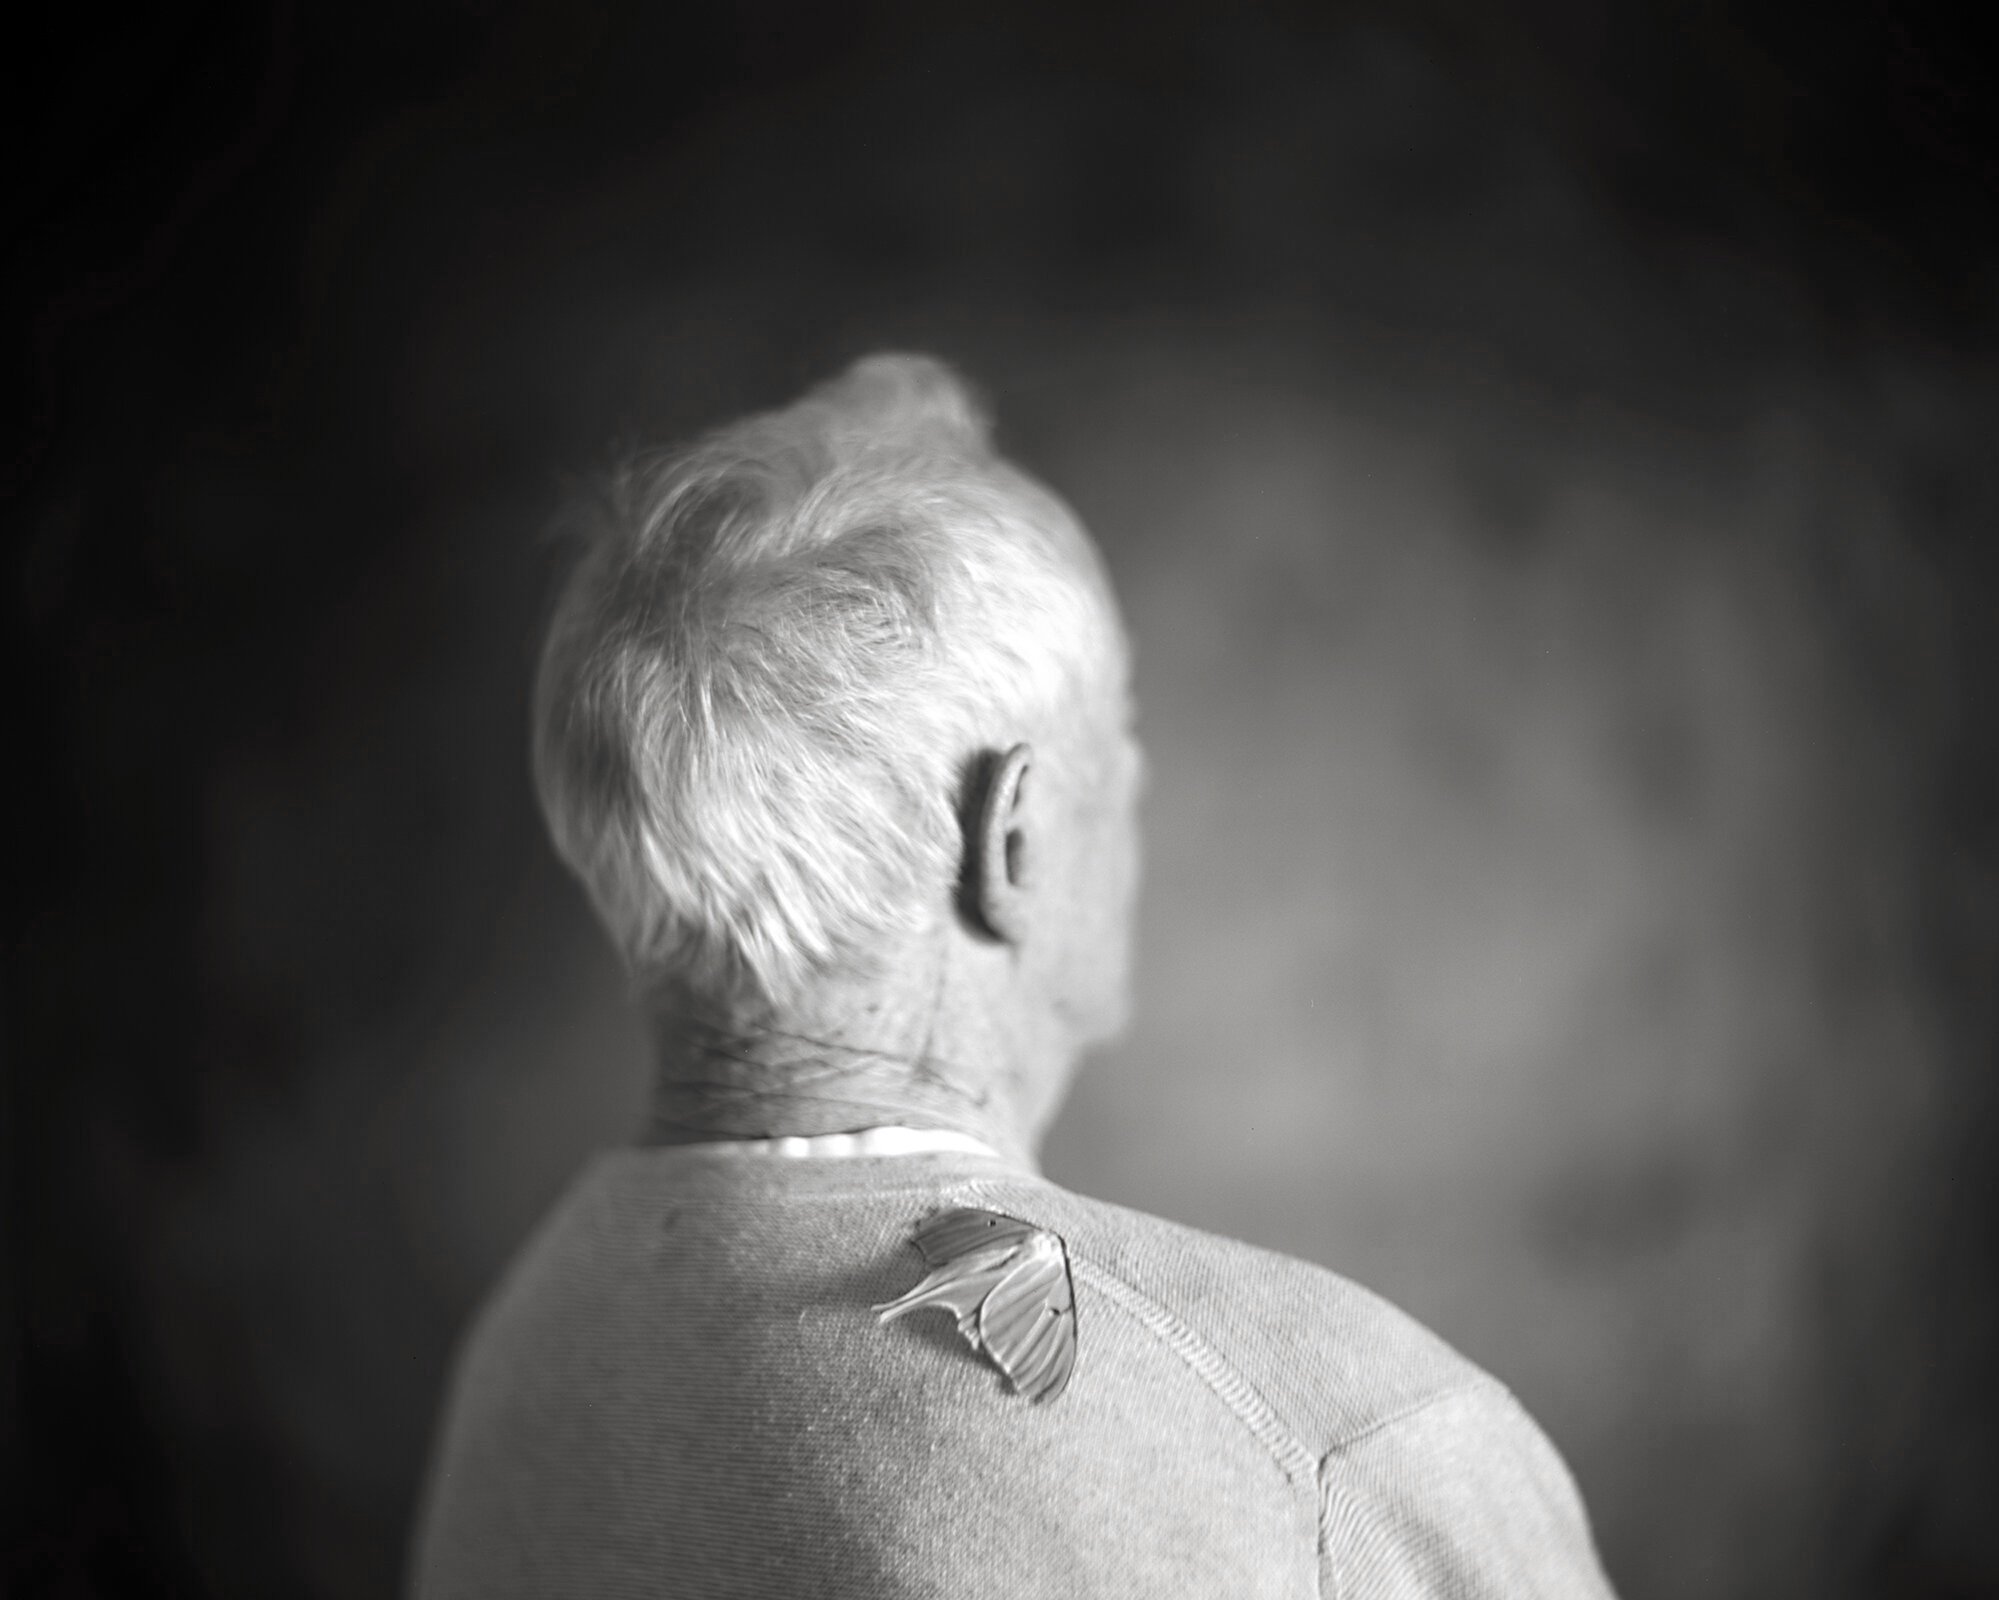  ETERNITY, DAD AT 91, 2018  GELATIN SILVER PHOTOGRAPH 